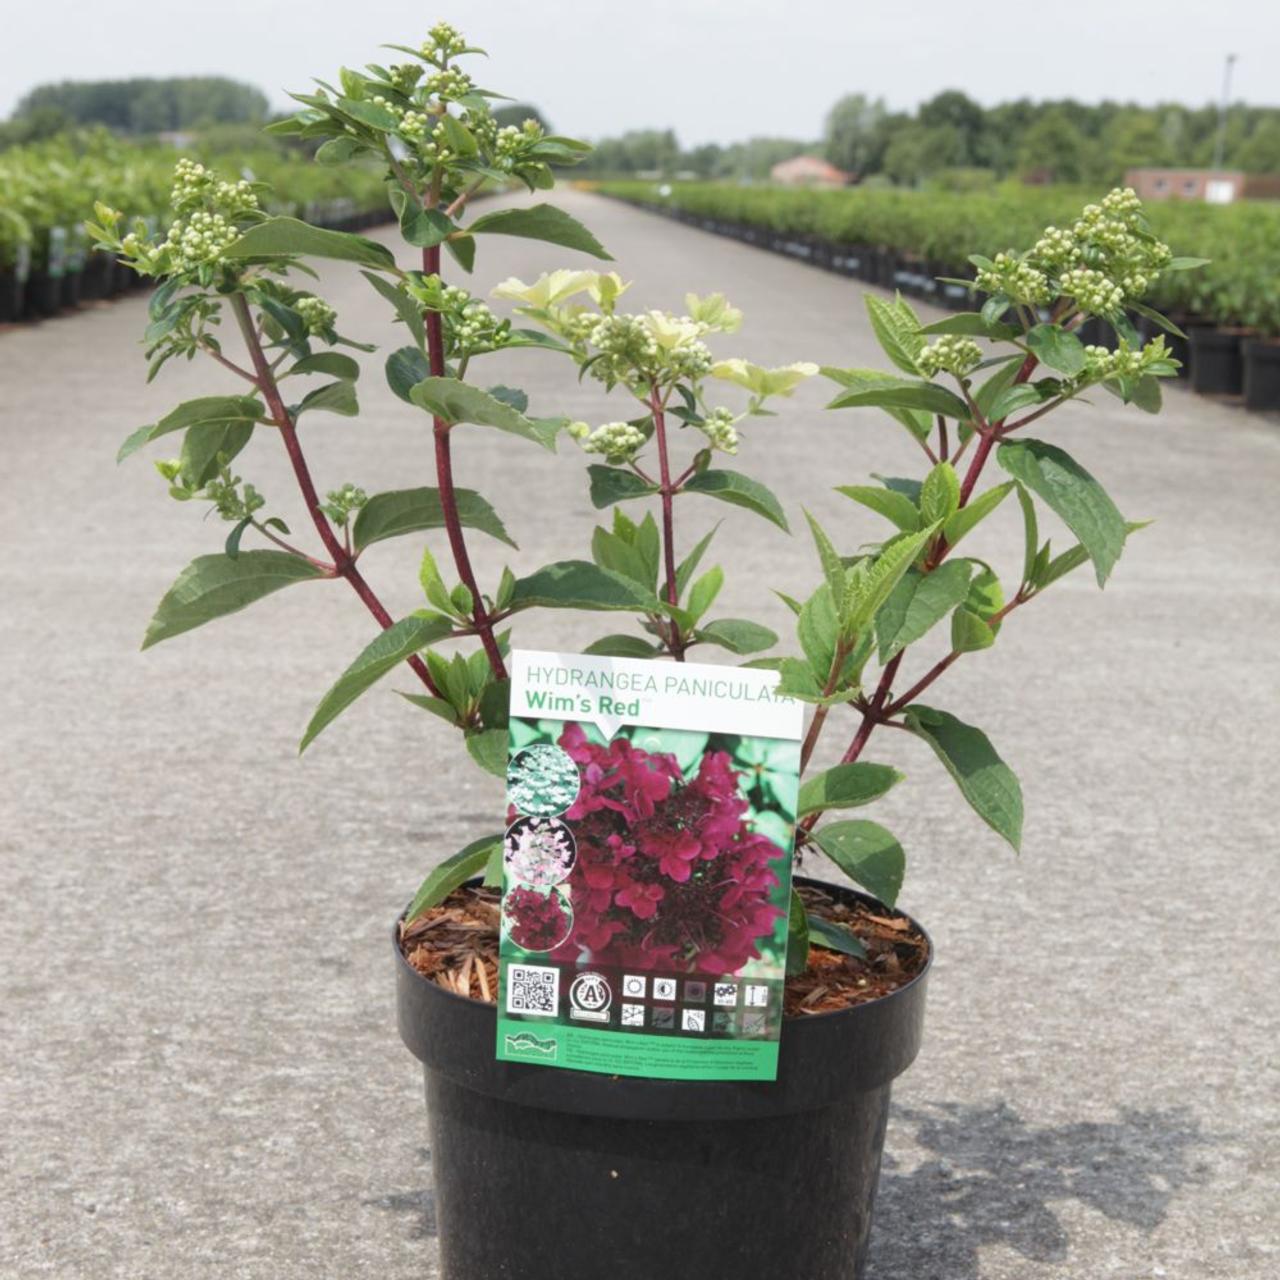 Hydrangea paniculata 'Wim's Red' plant